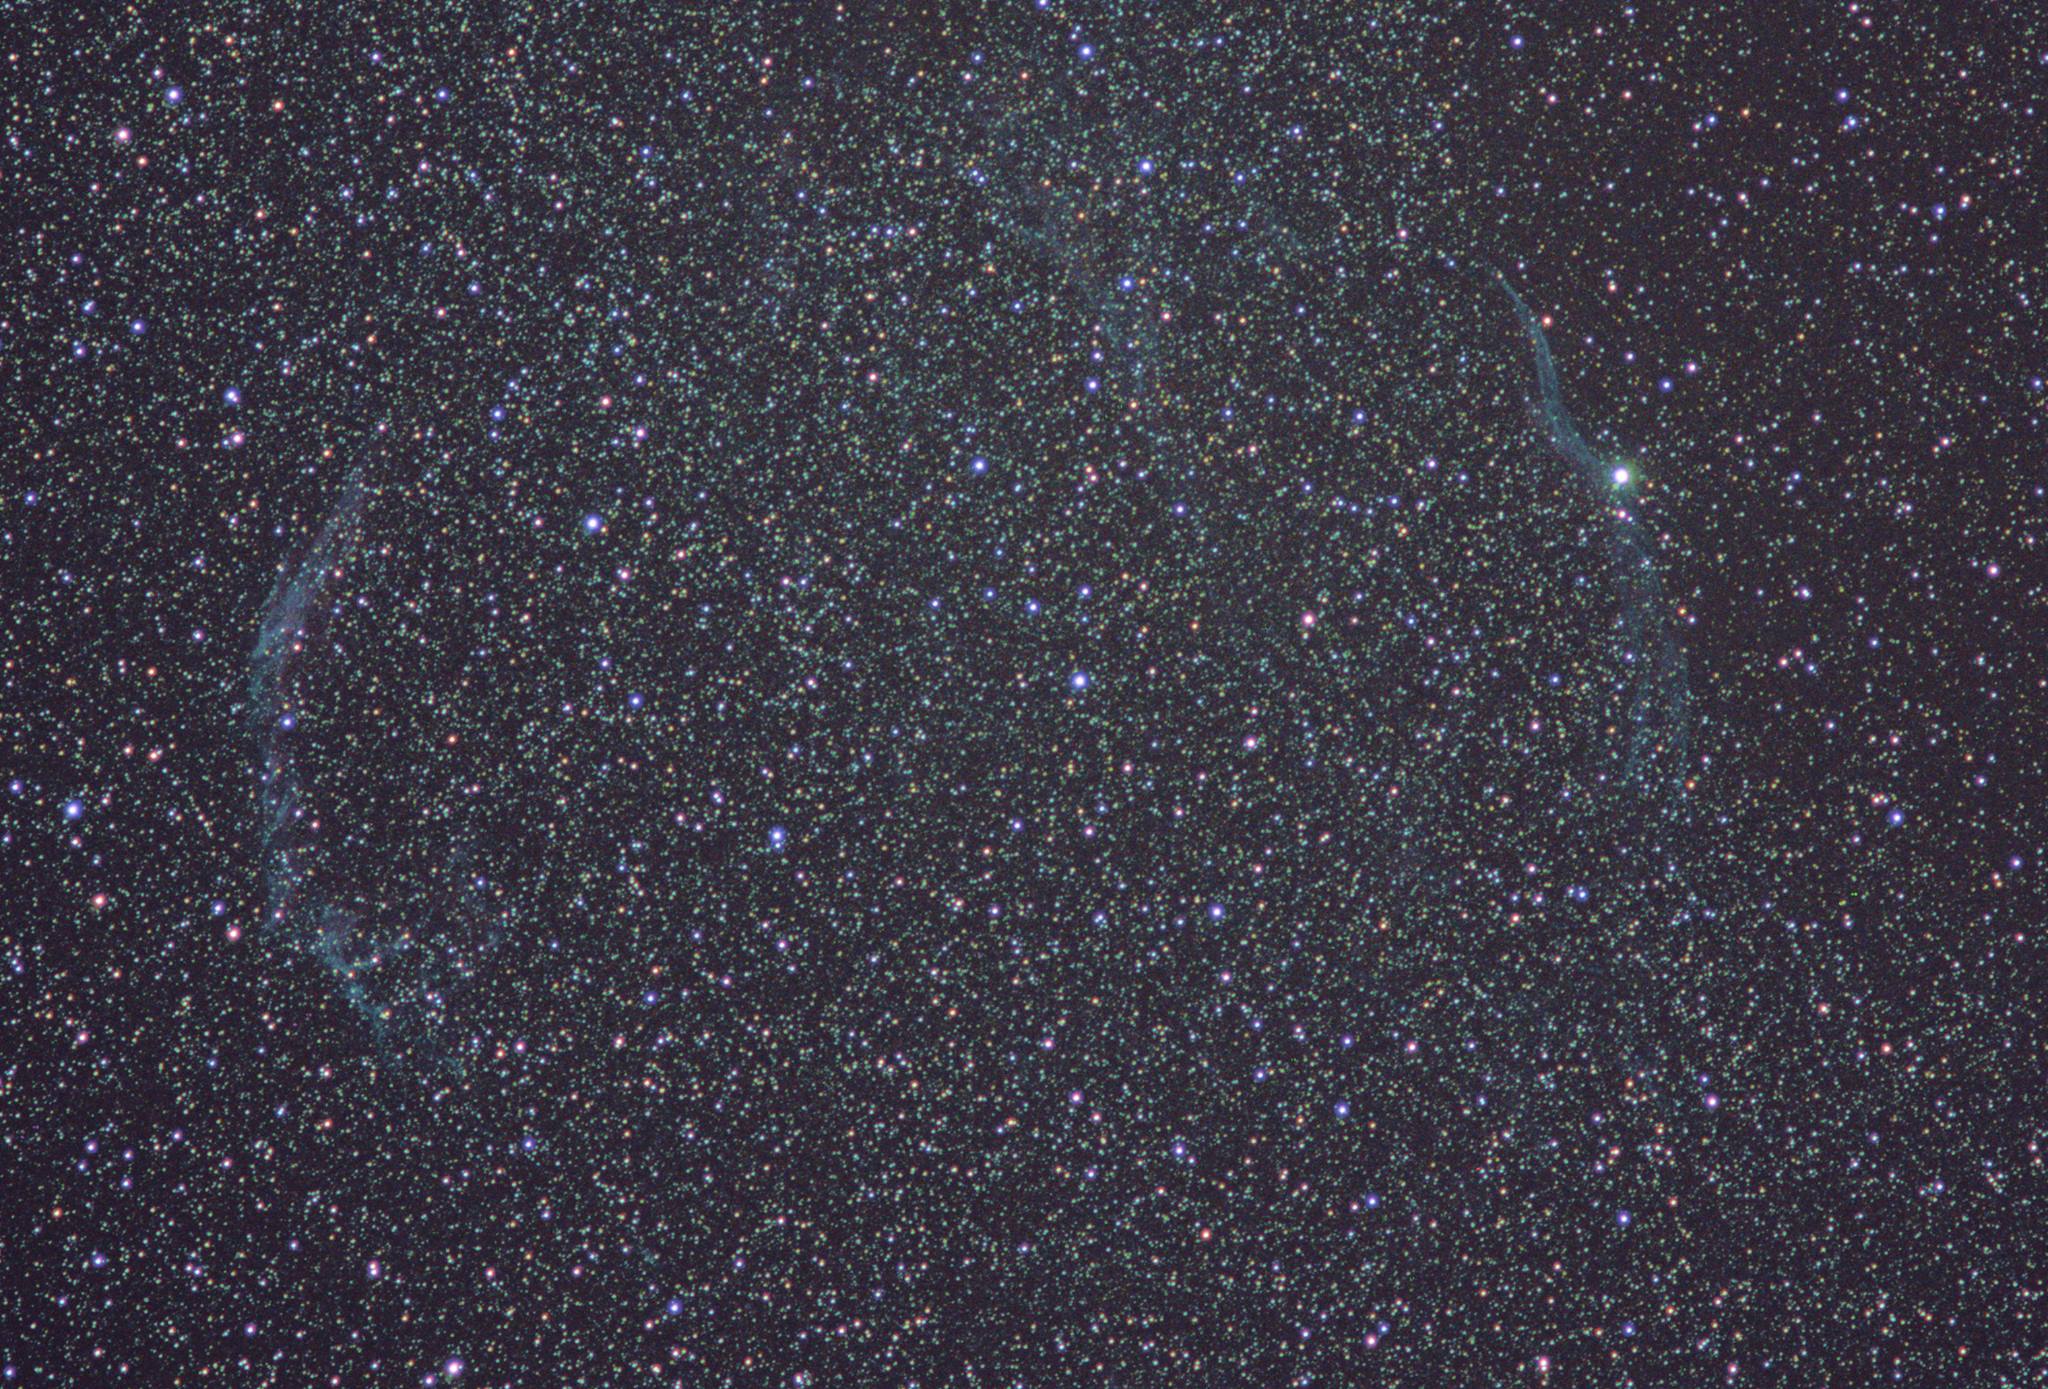 Veil nebula 5x2min iso 800.jpg